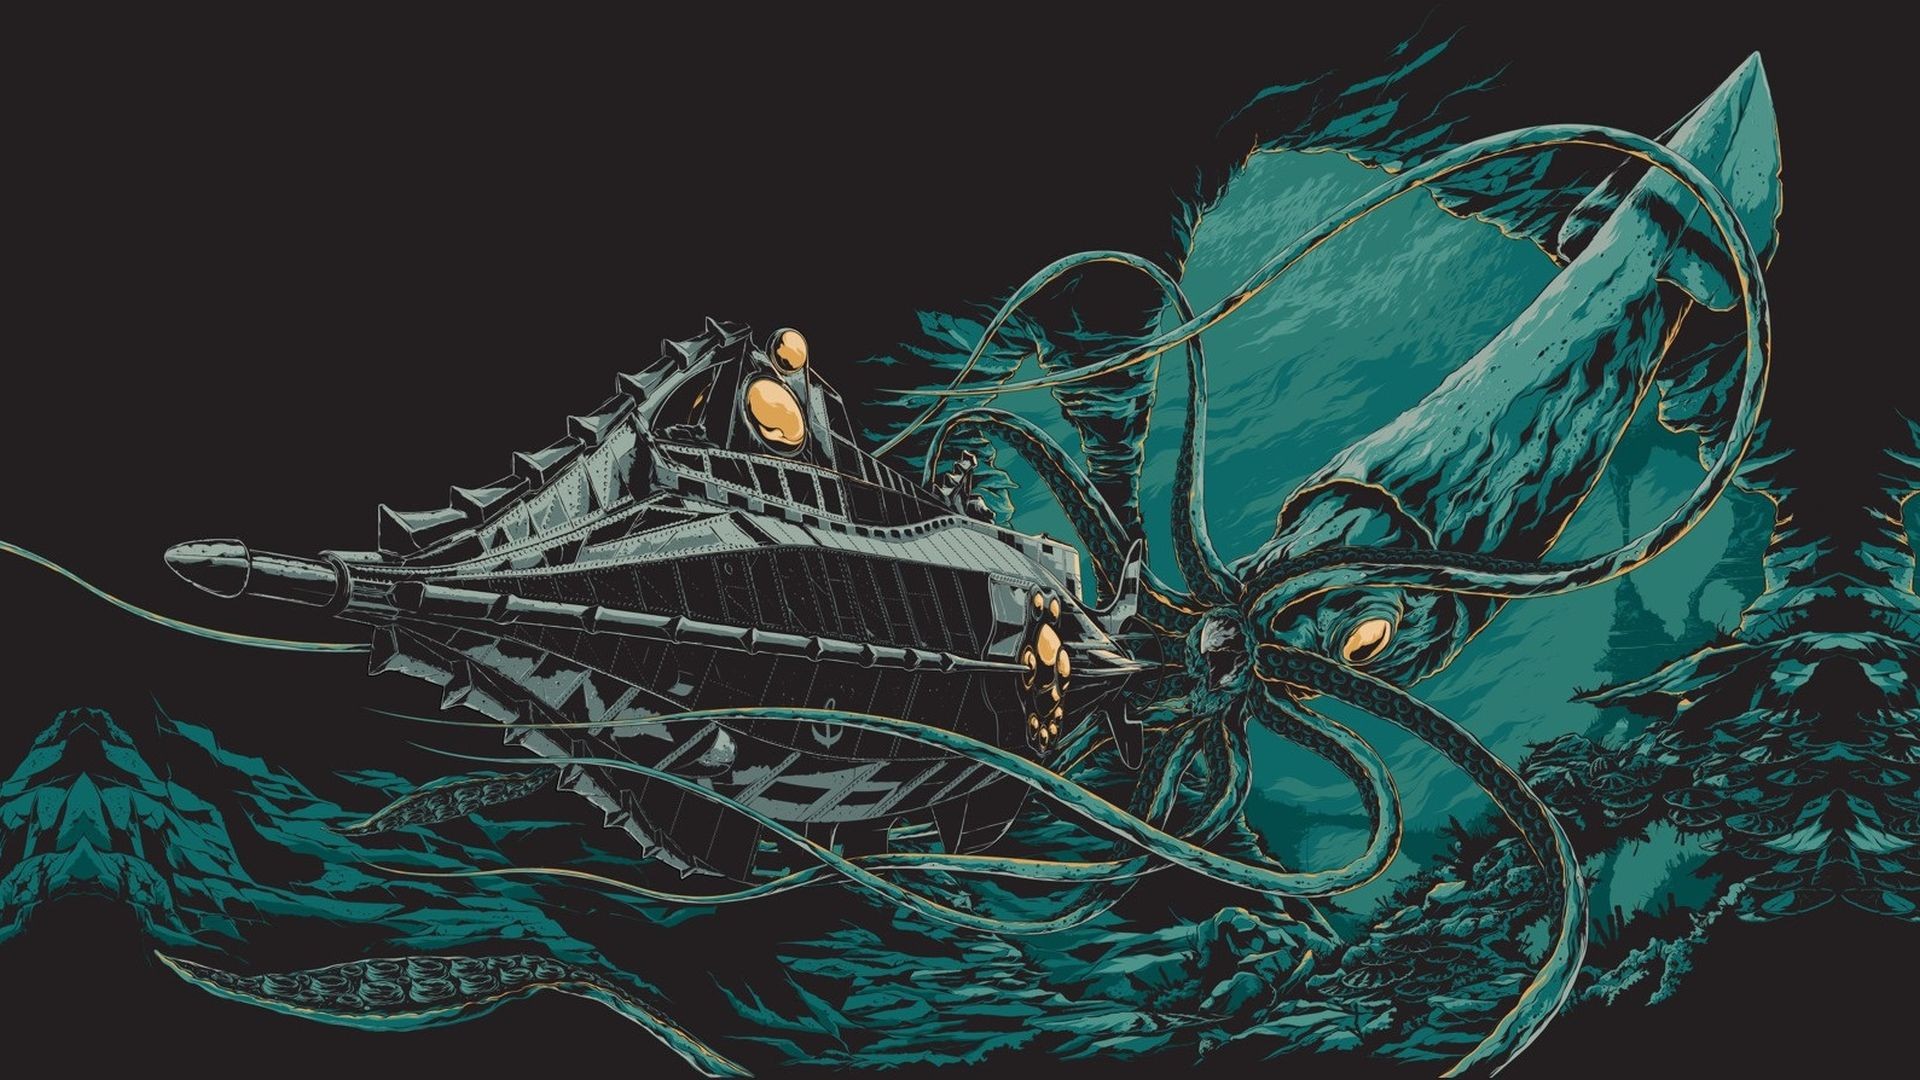 General 1920x1080 digital art illustration 20000 Leagues Under the Sea Jules Verne underwater sea drawing sea monsters submarine black background squids Nautilus